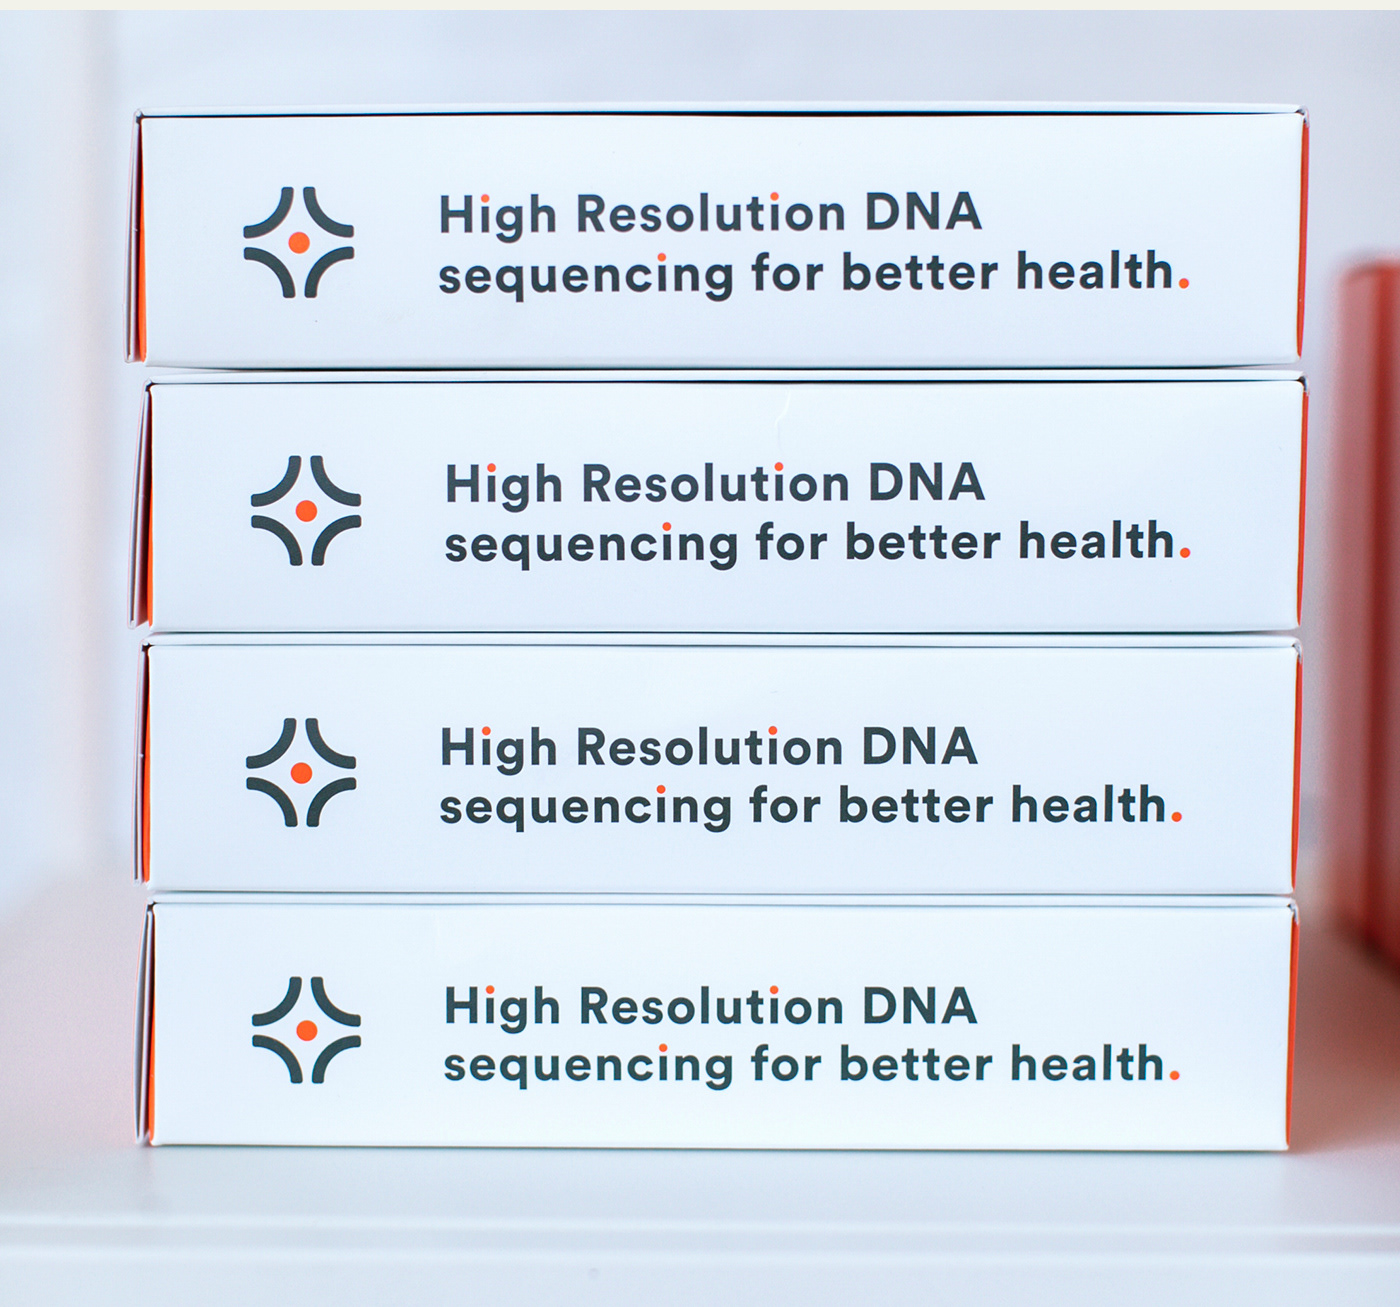 san diego design branding  San Diego branding health and wellness supplements biotech probiotics science brand Health science